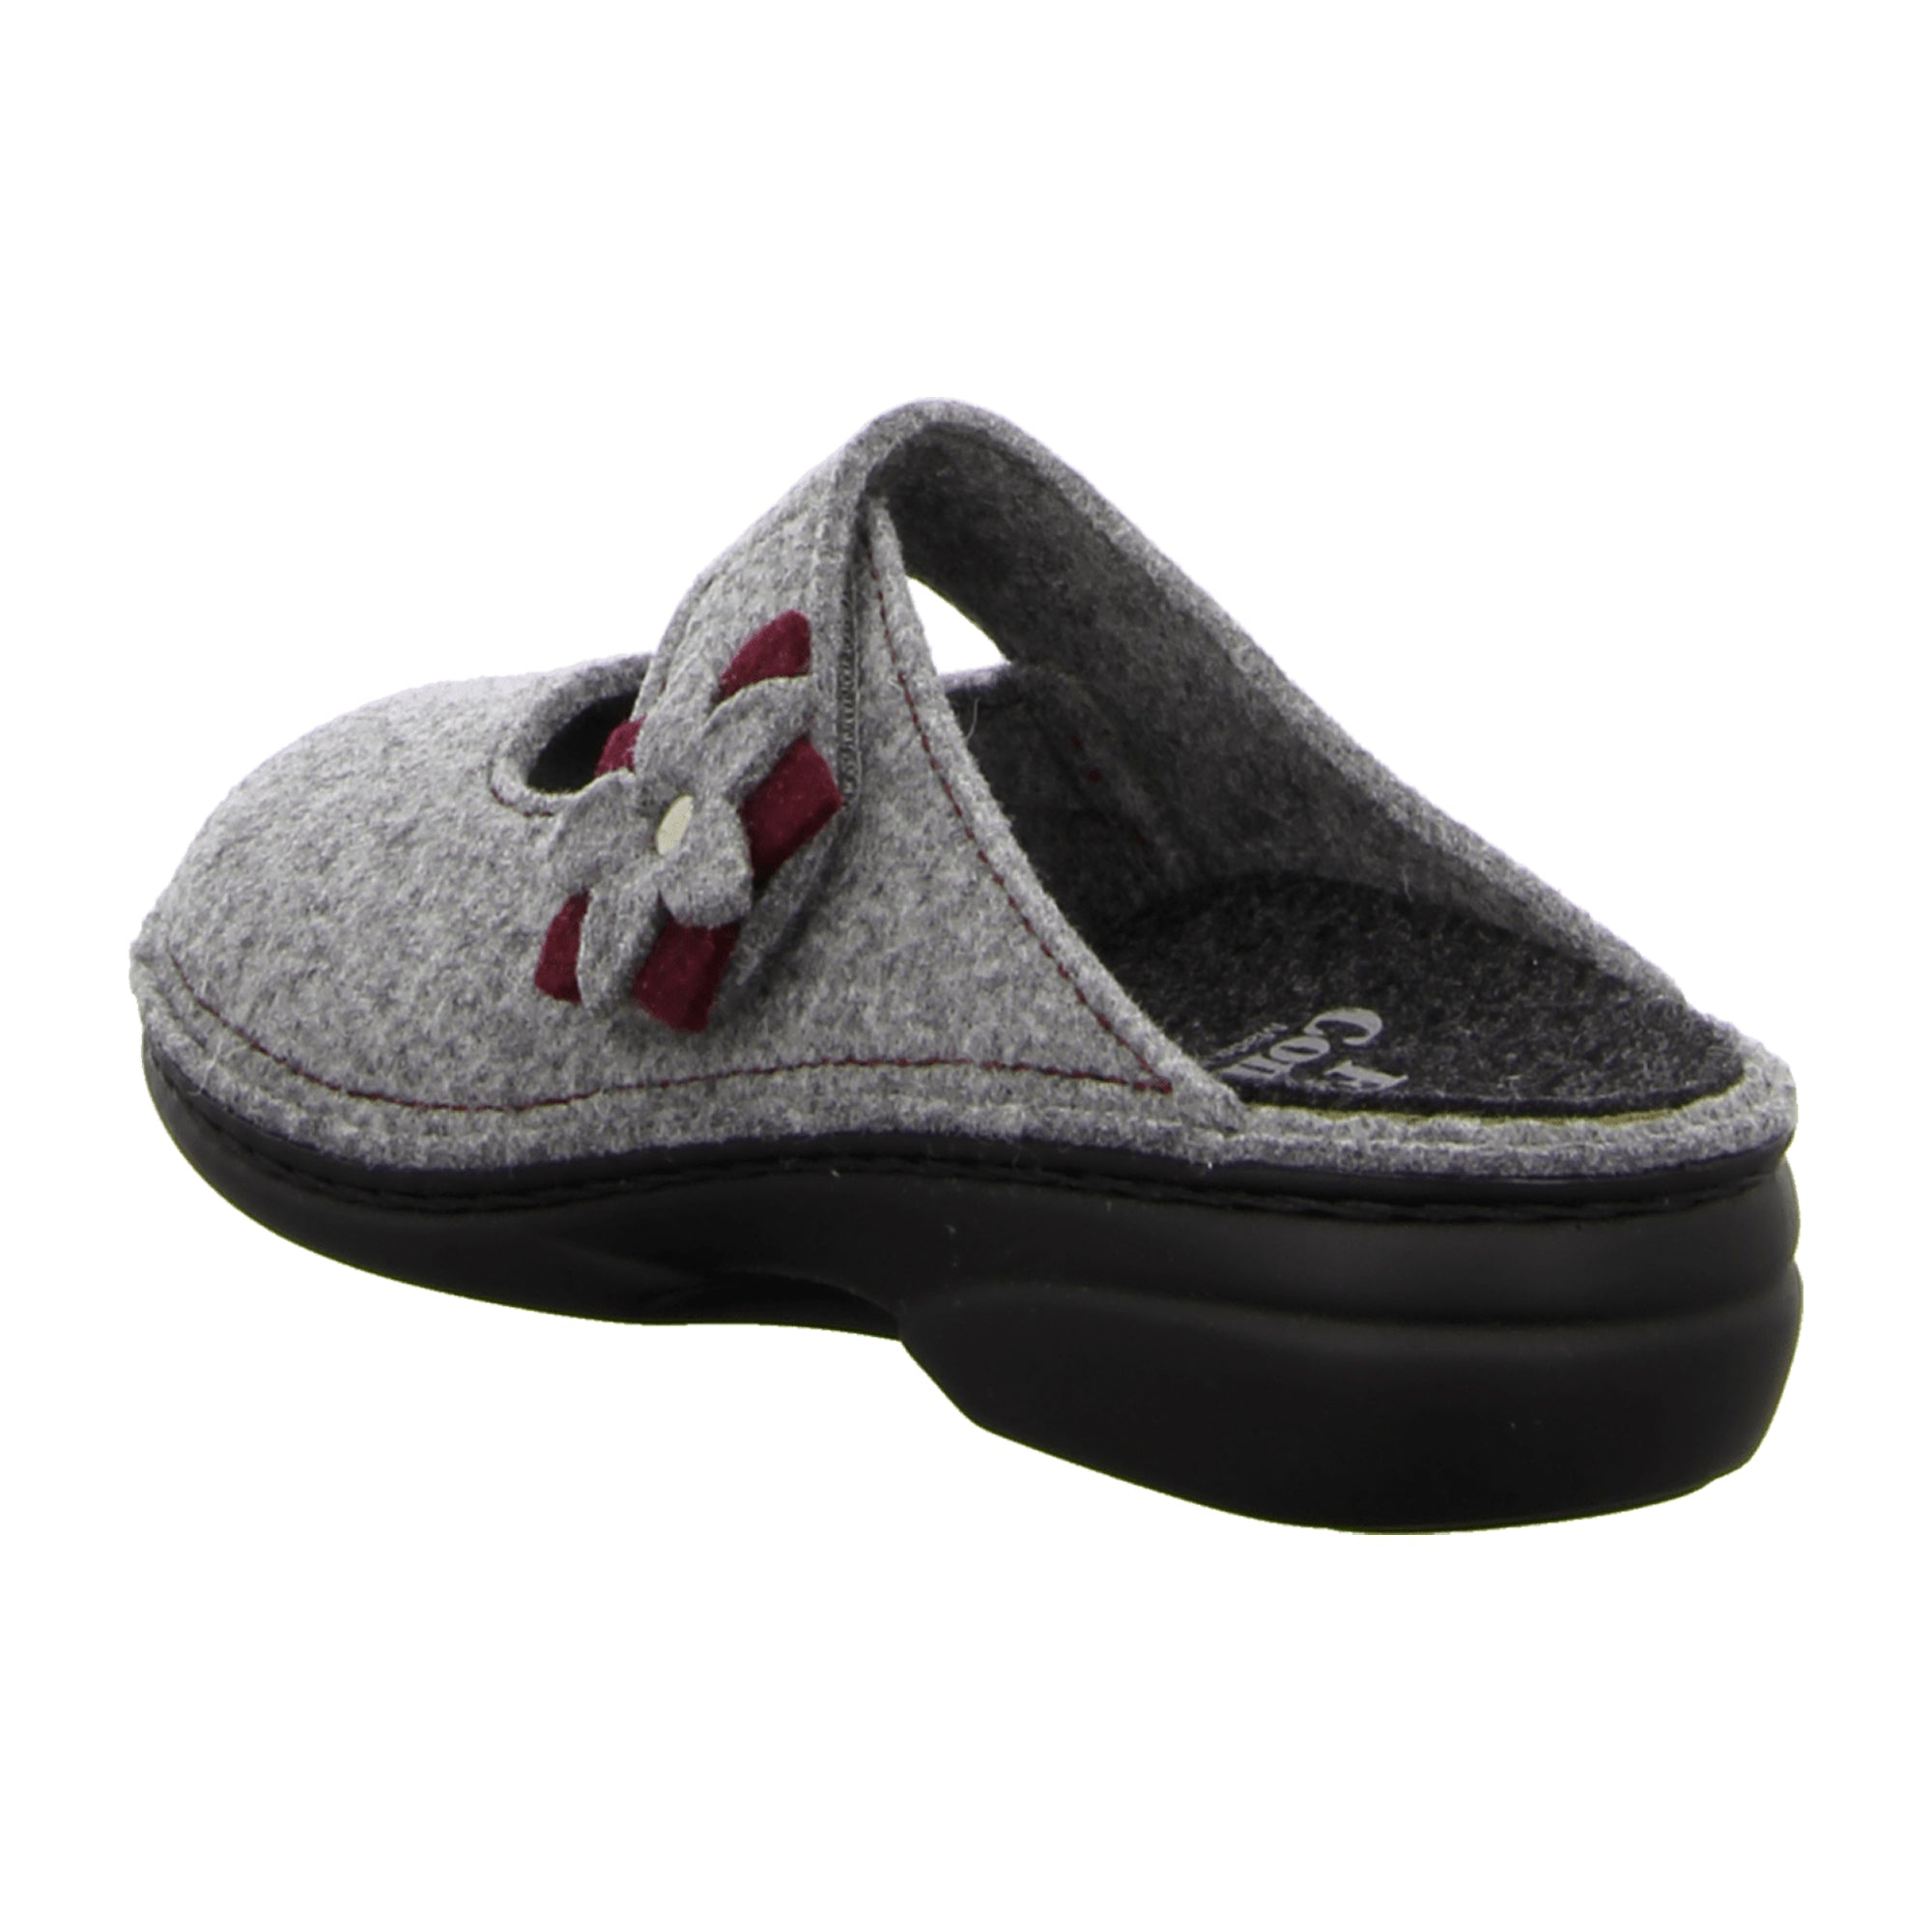 Finn Comfort Damen Orthopedic Shoes - Stylish & Comfortable Grey Sneakers